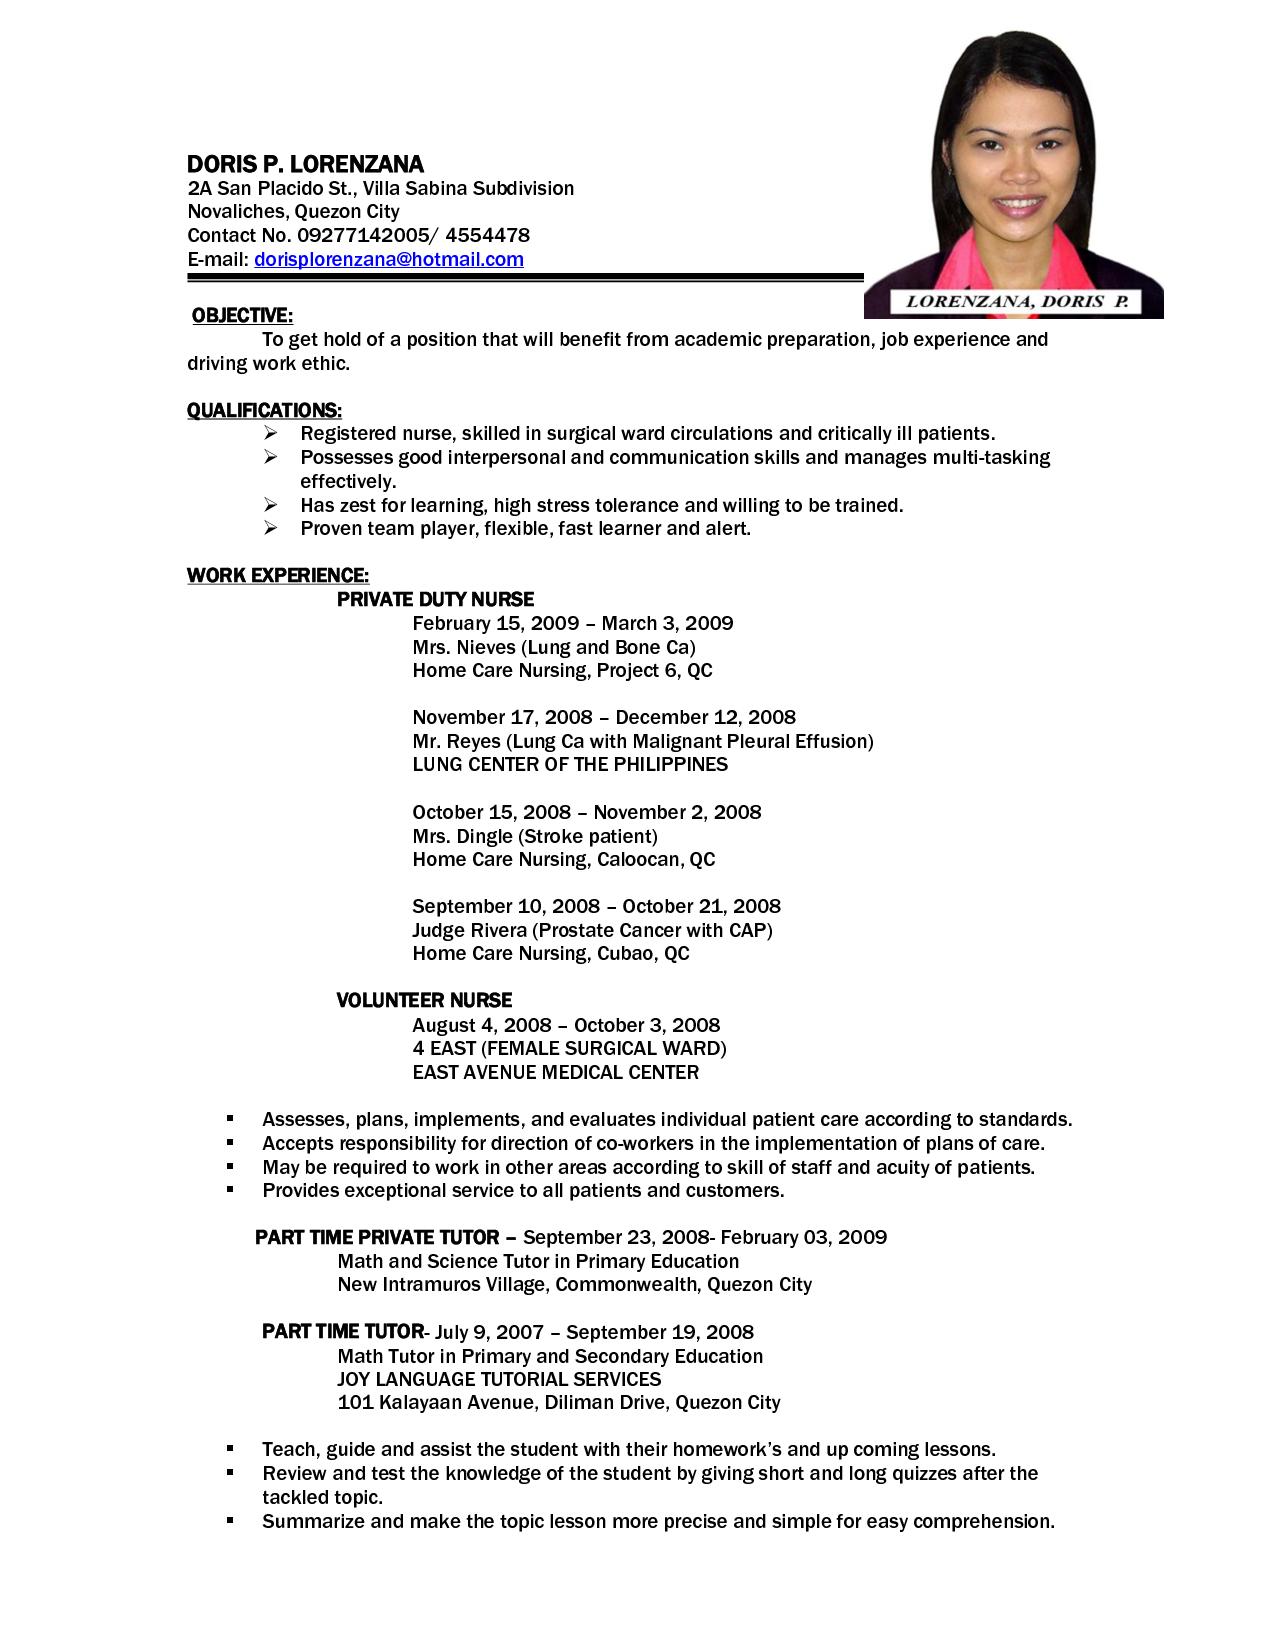 Resume-Sample-15